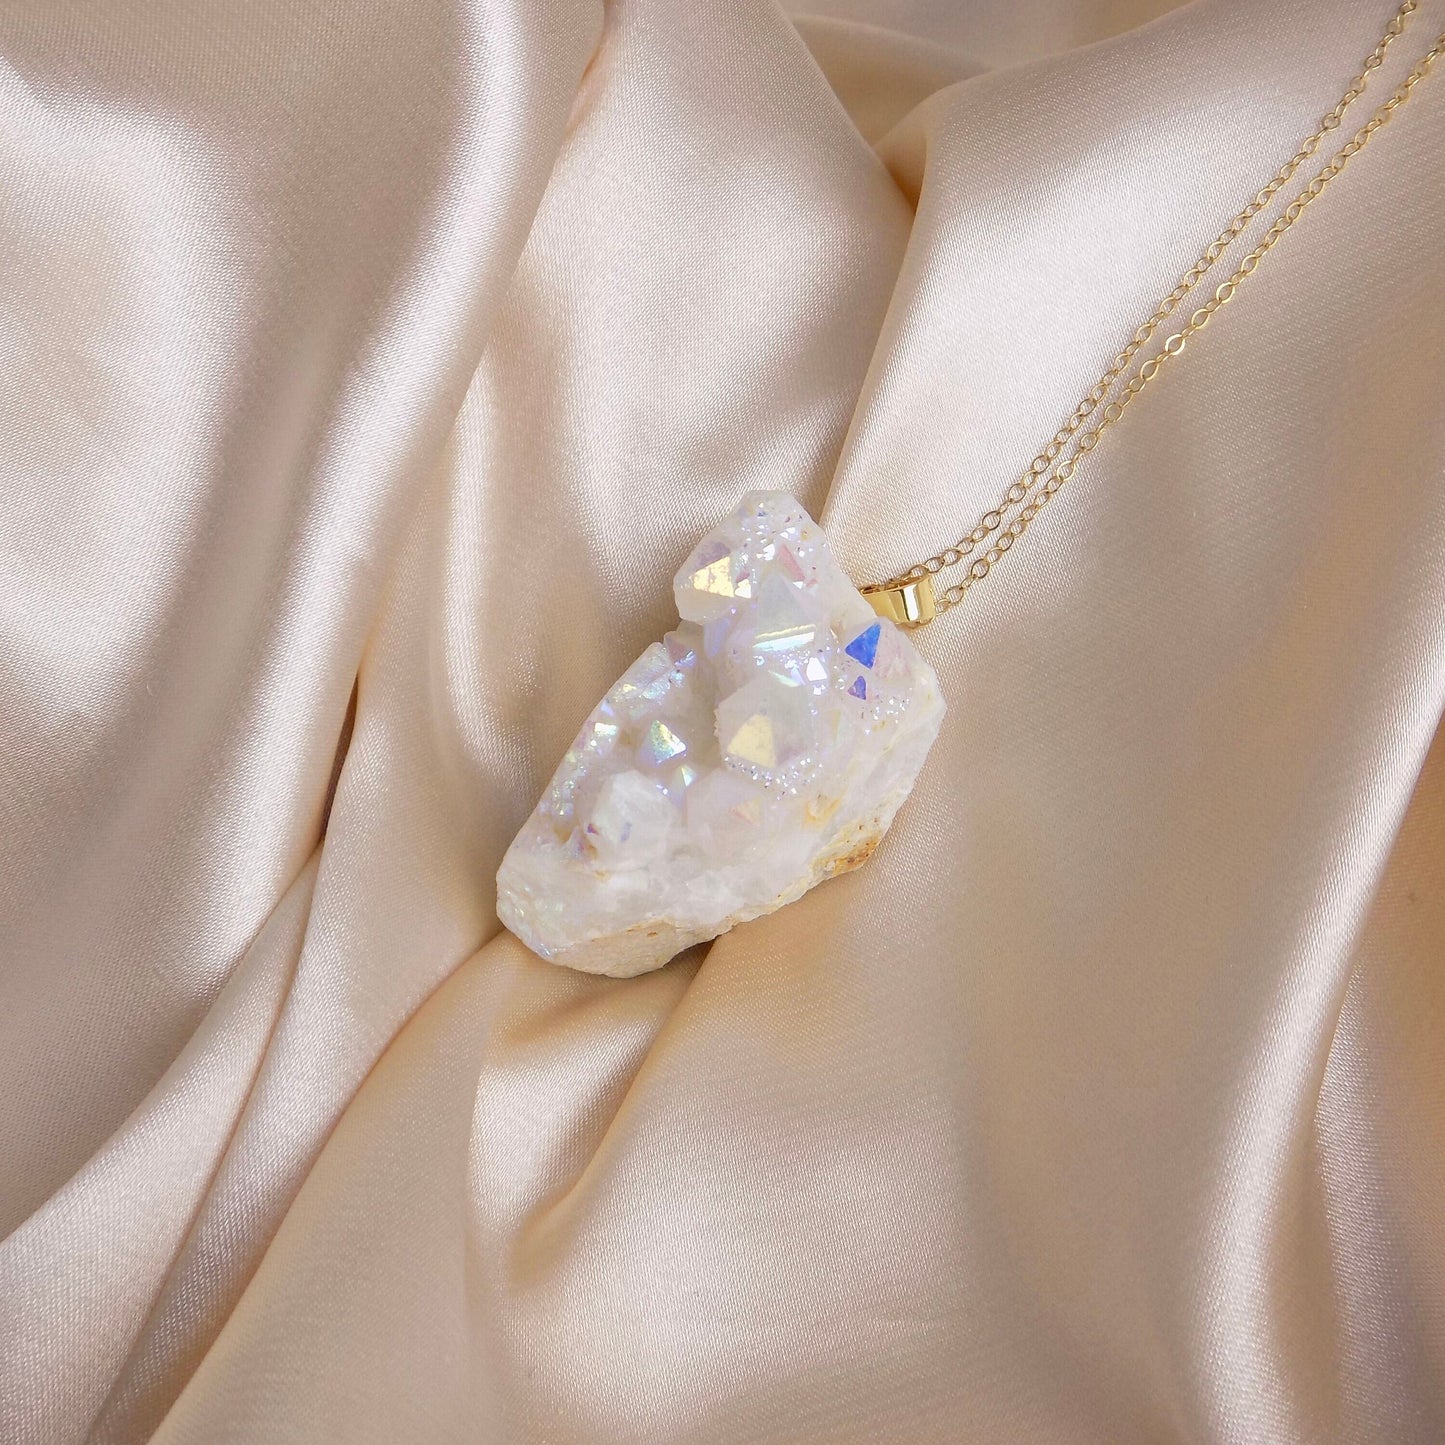 Angel Aura Quartz Necklace, Large Iridescent White Druzy Pendant Necklace Gold, Gift For Her, M6-773